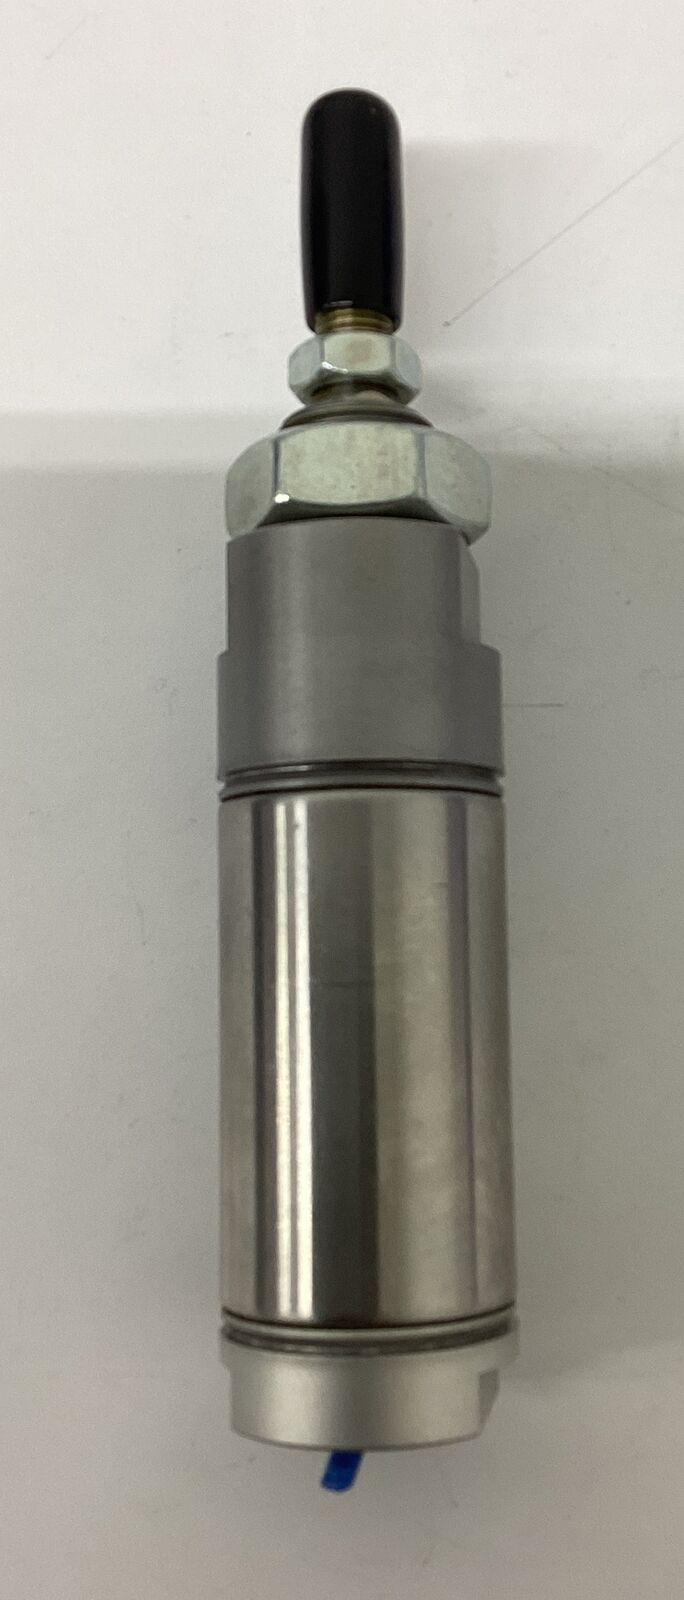 SMC NCDMKB125-0100 Pneumatic Cylinder 1-1/4'' Bore , 1'' Stroke (RE142)